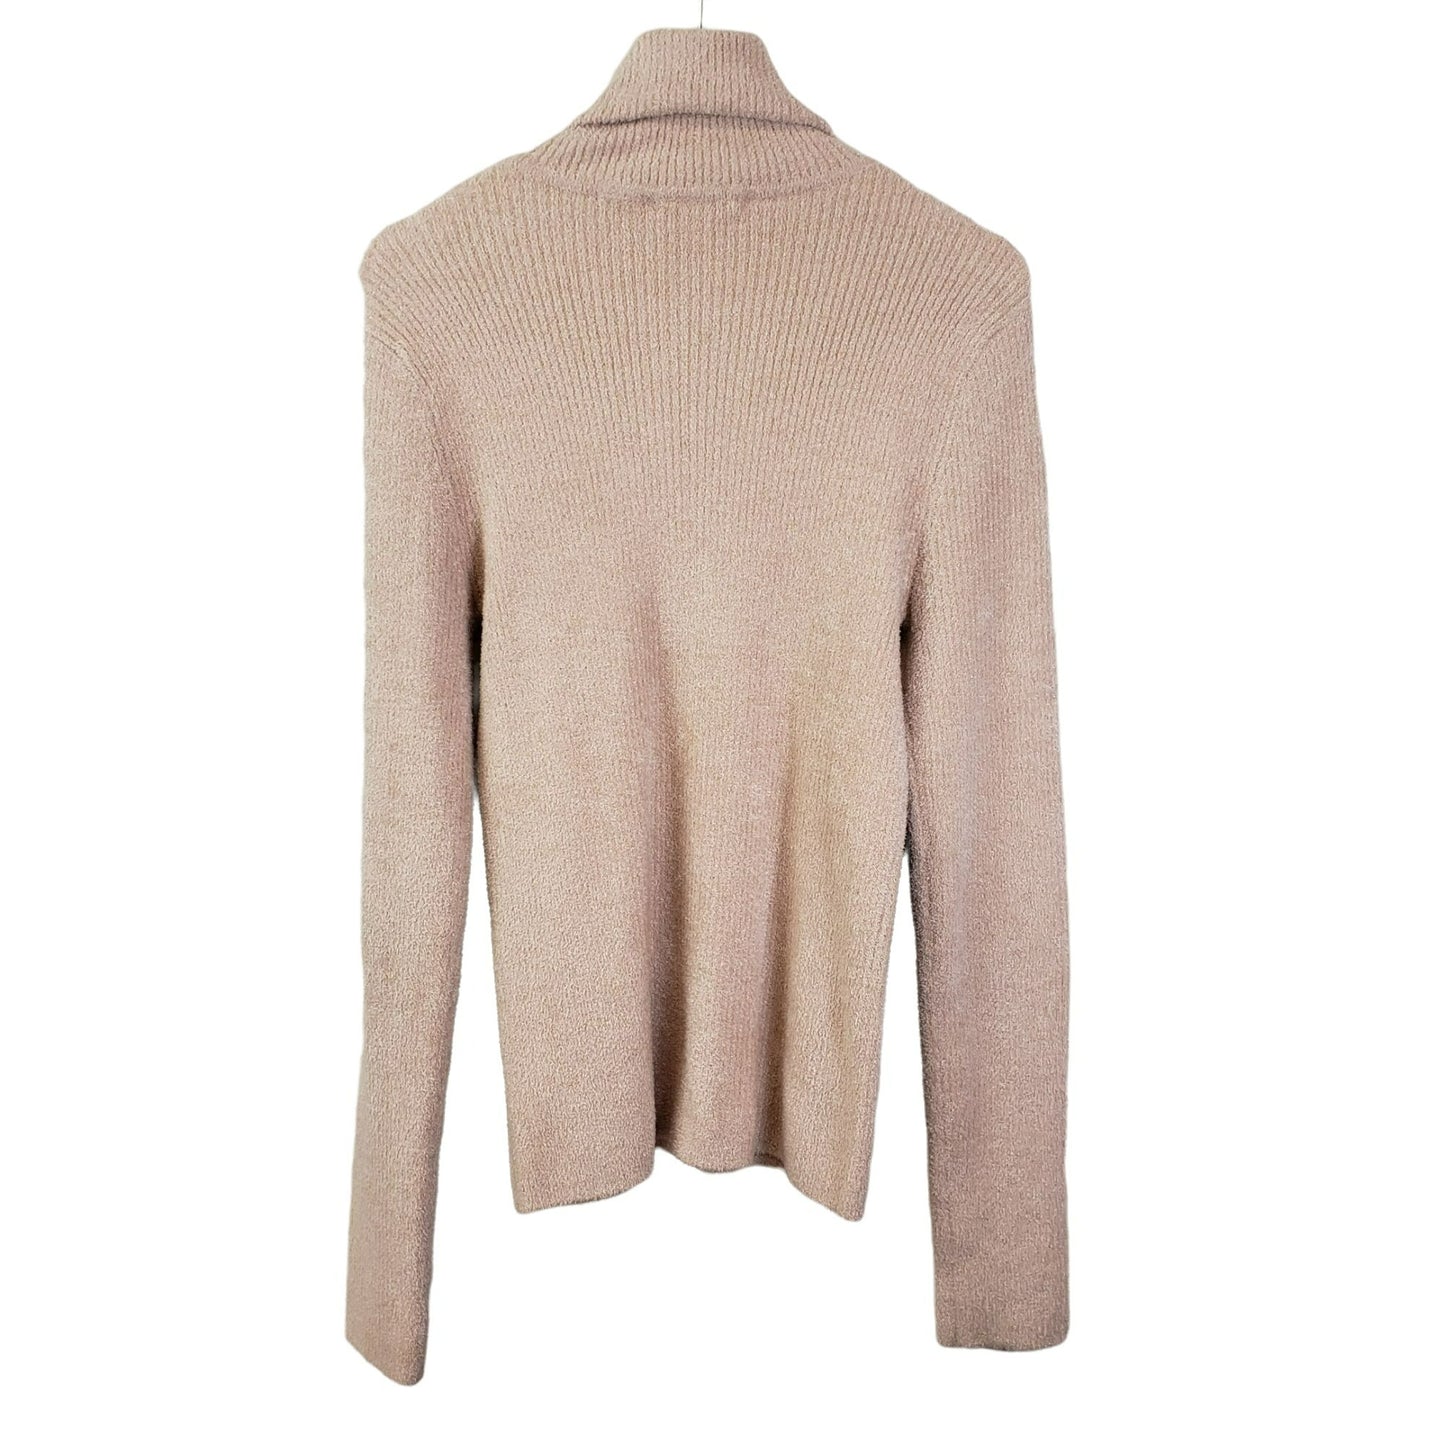 Moda International Metallic Turtleneck Sweater Size M/L